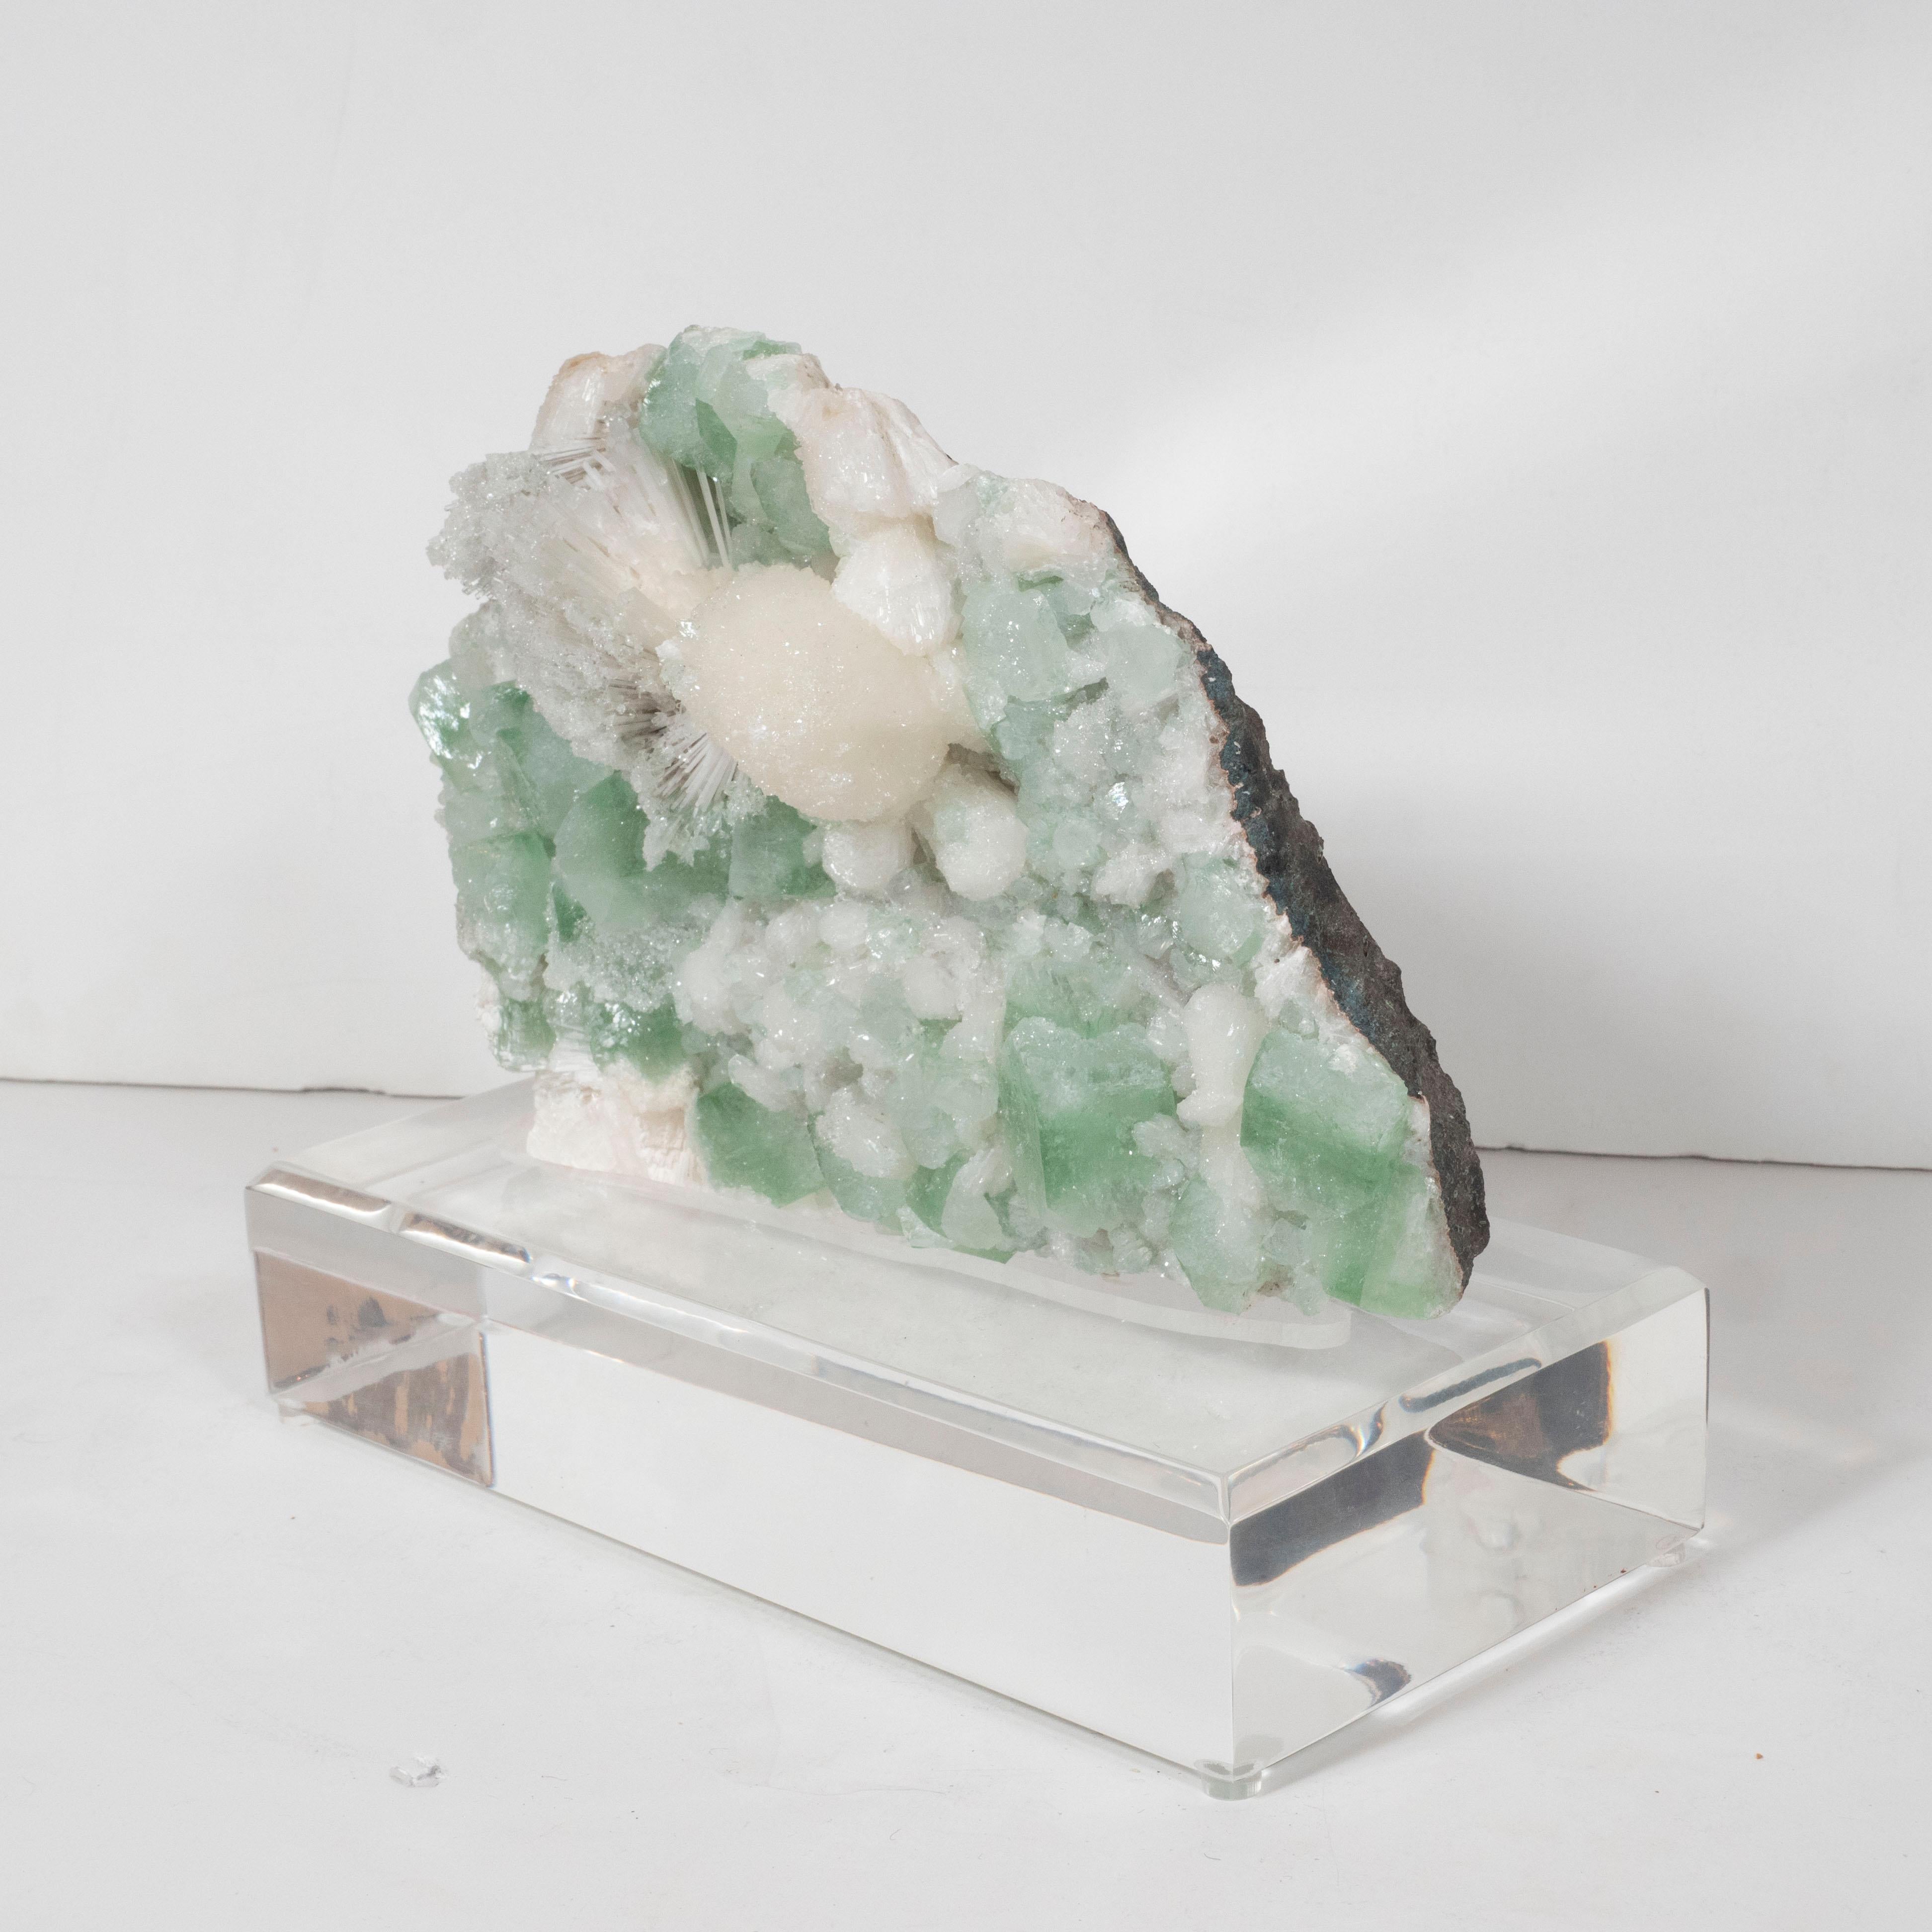 20th Century Rare Modernist Green Apophylite & Scolocite Rock Crystal Specimen on Lucite Base